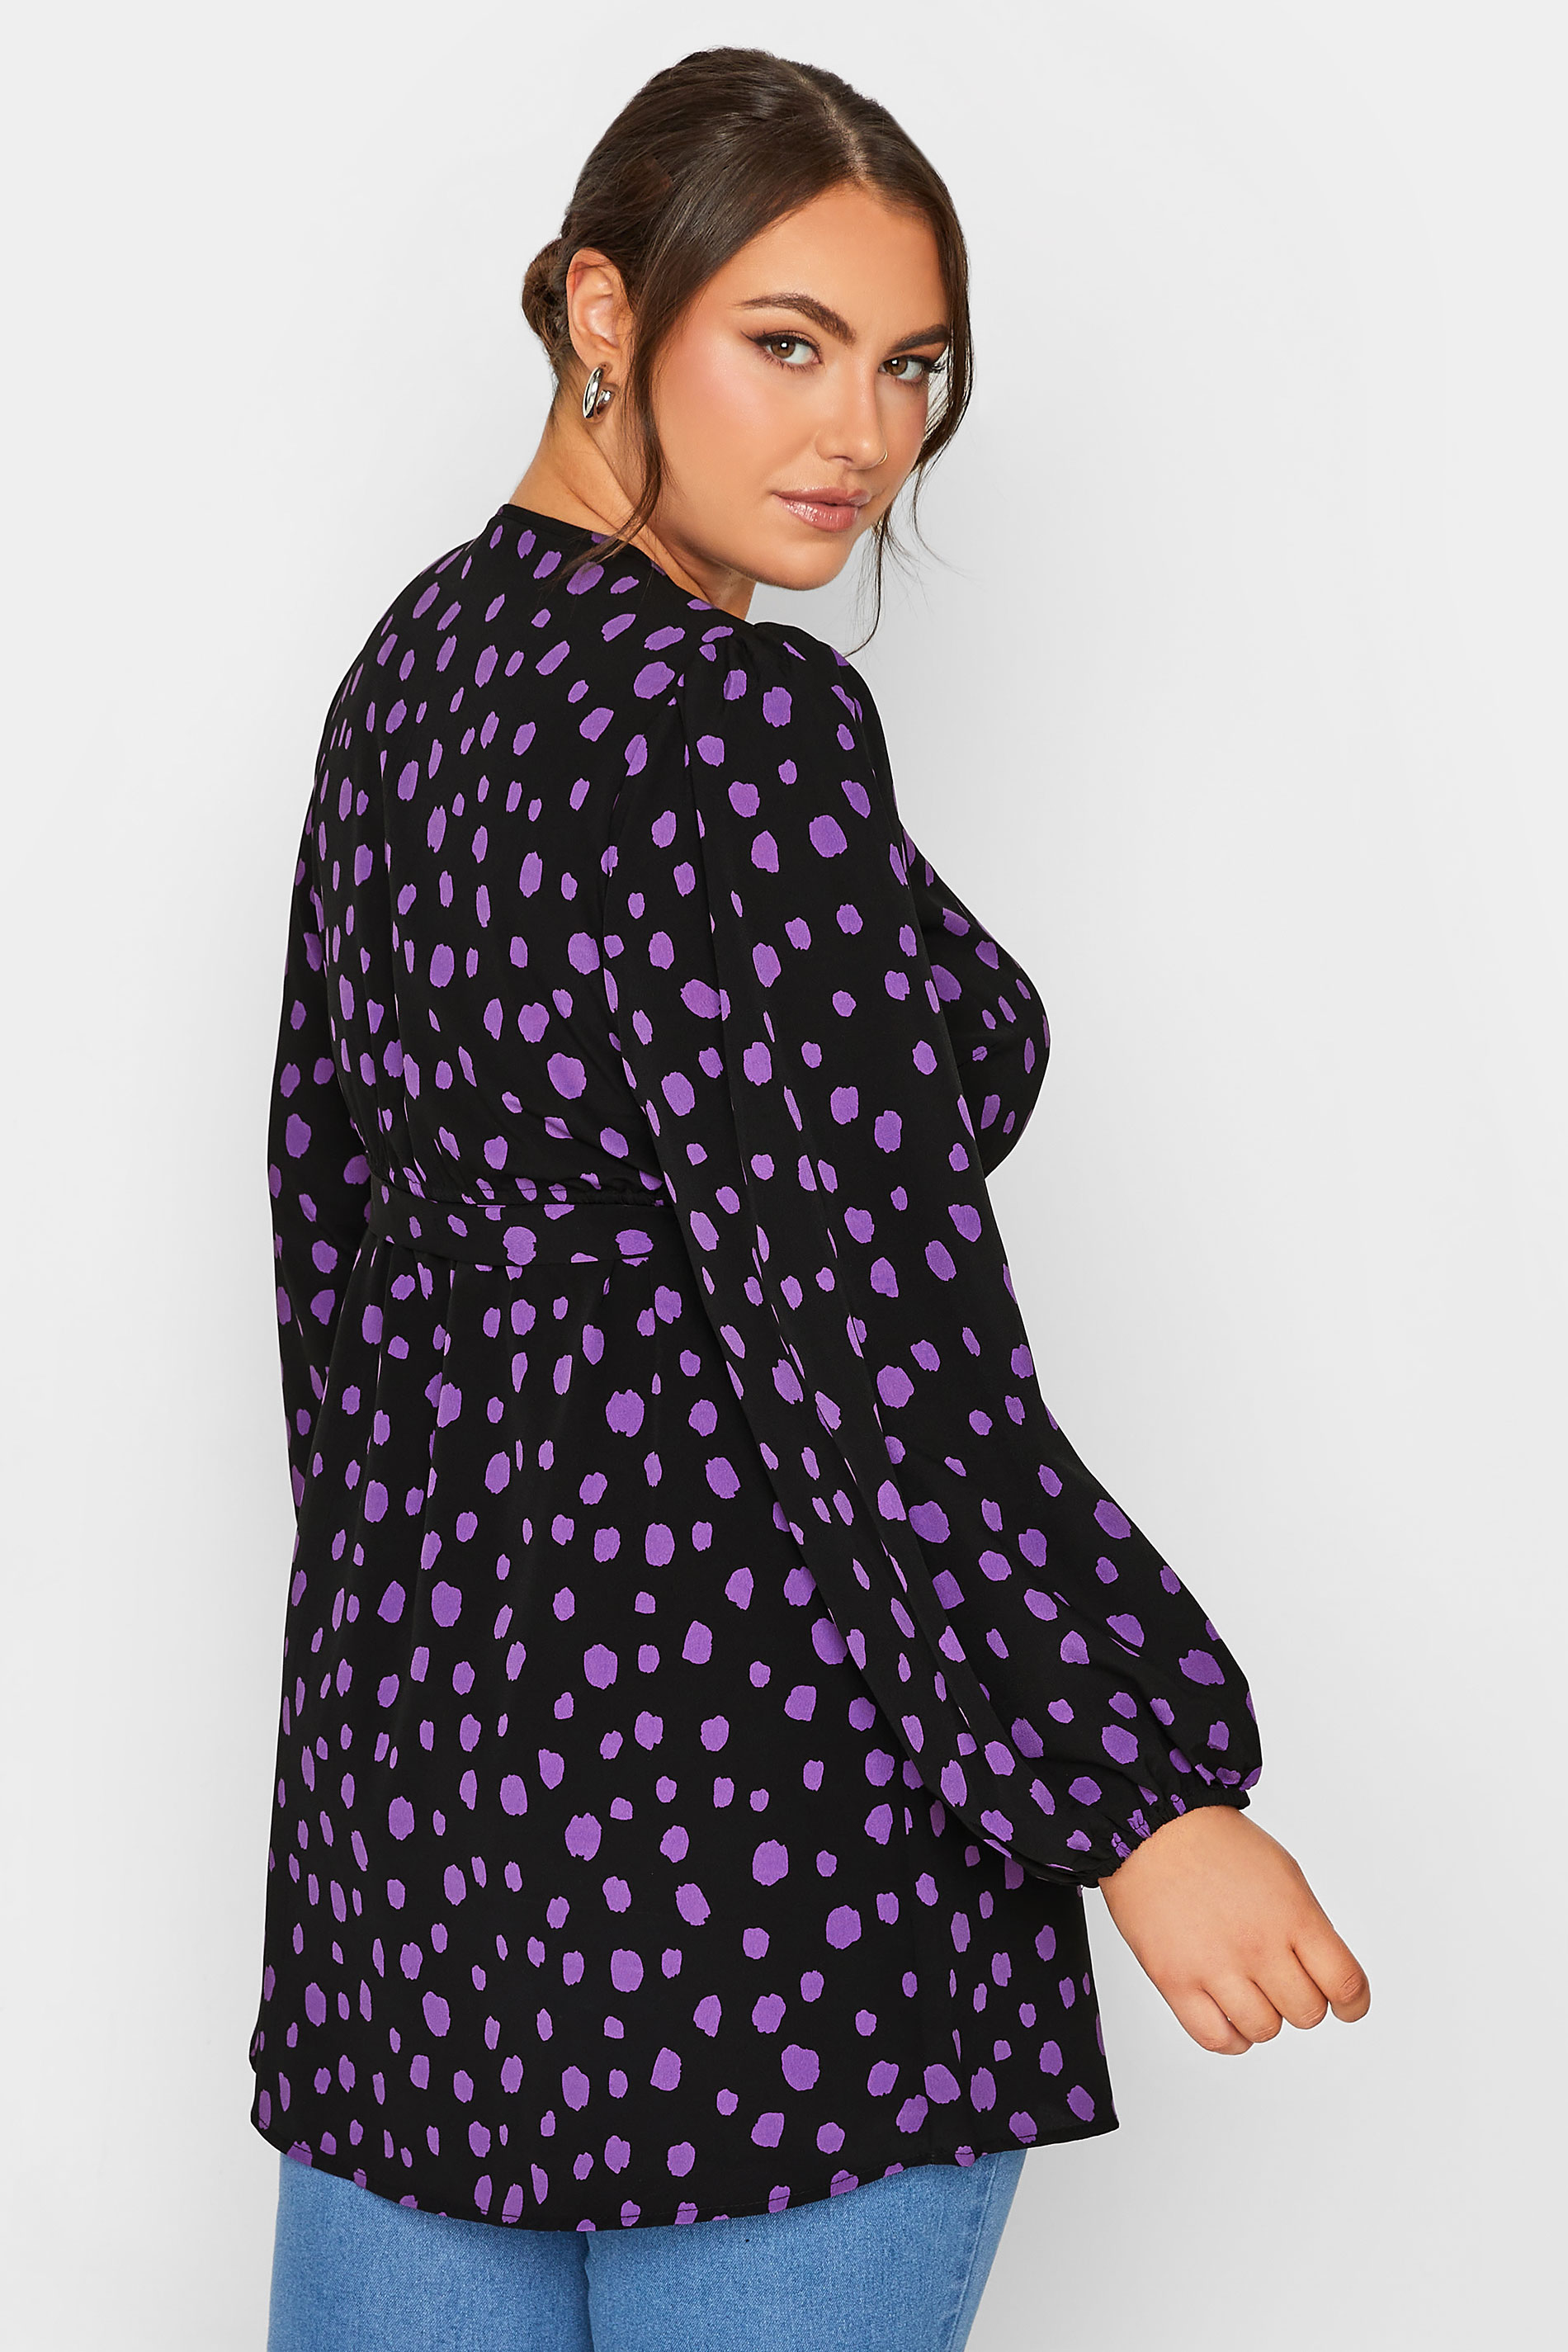 Plus Size Black & Purple Dalmatian Print Balloon Sleeve Wrap Top | Yours Clothing 3